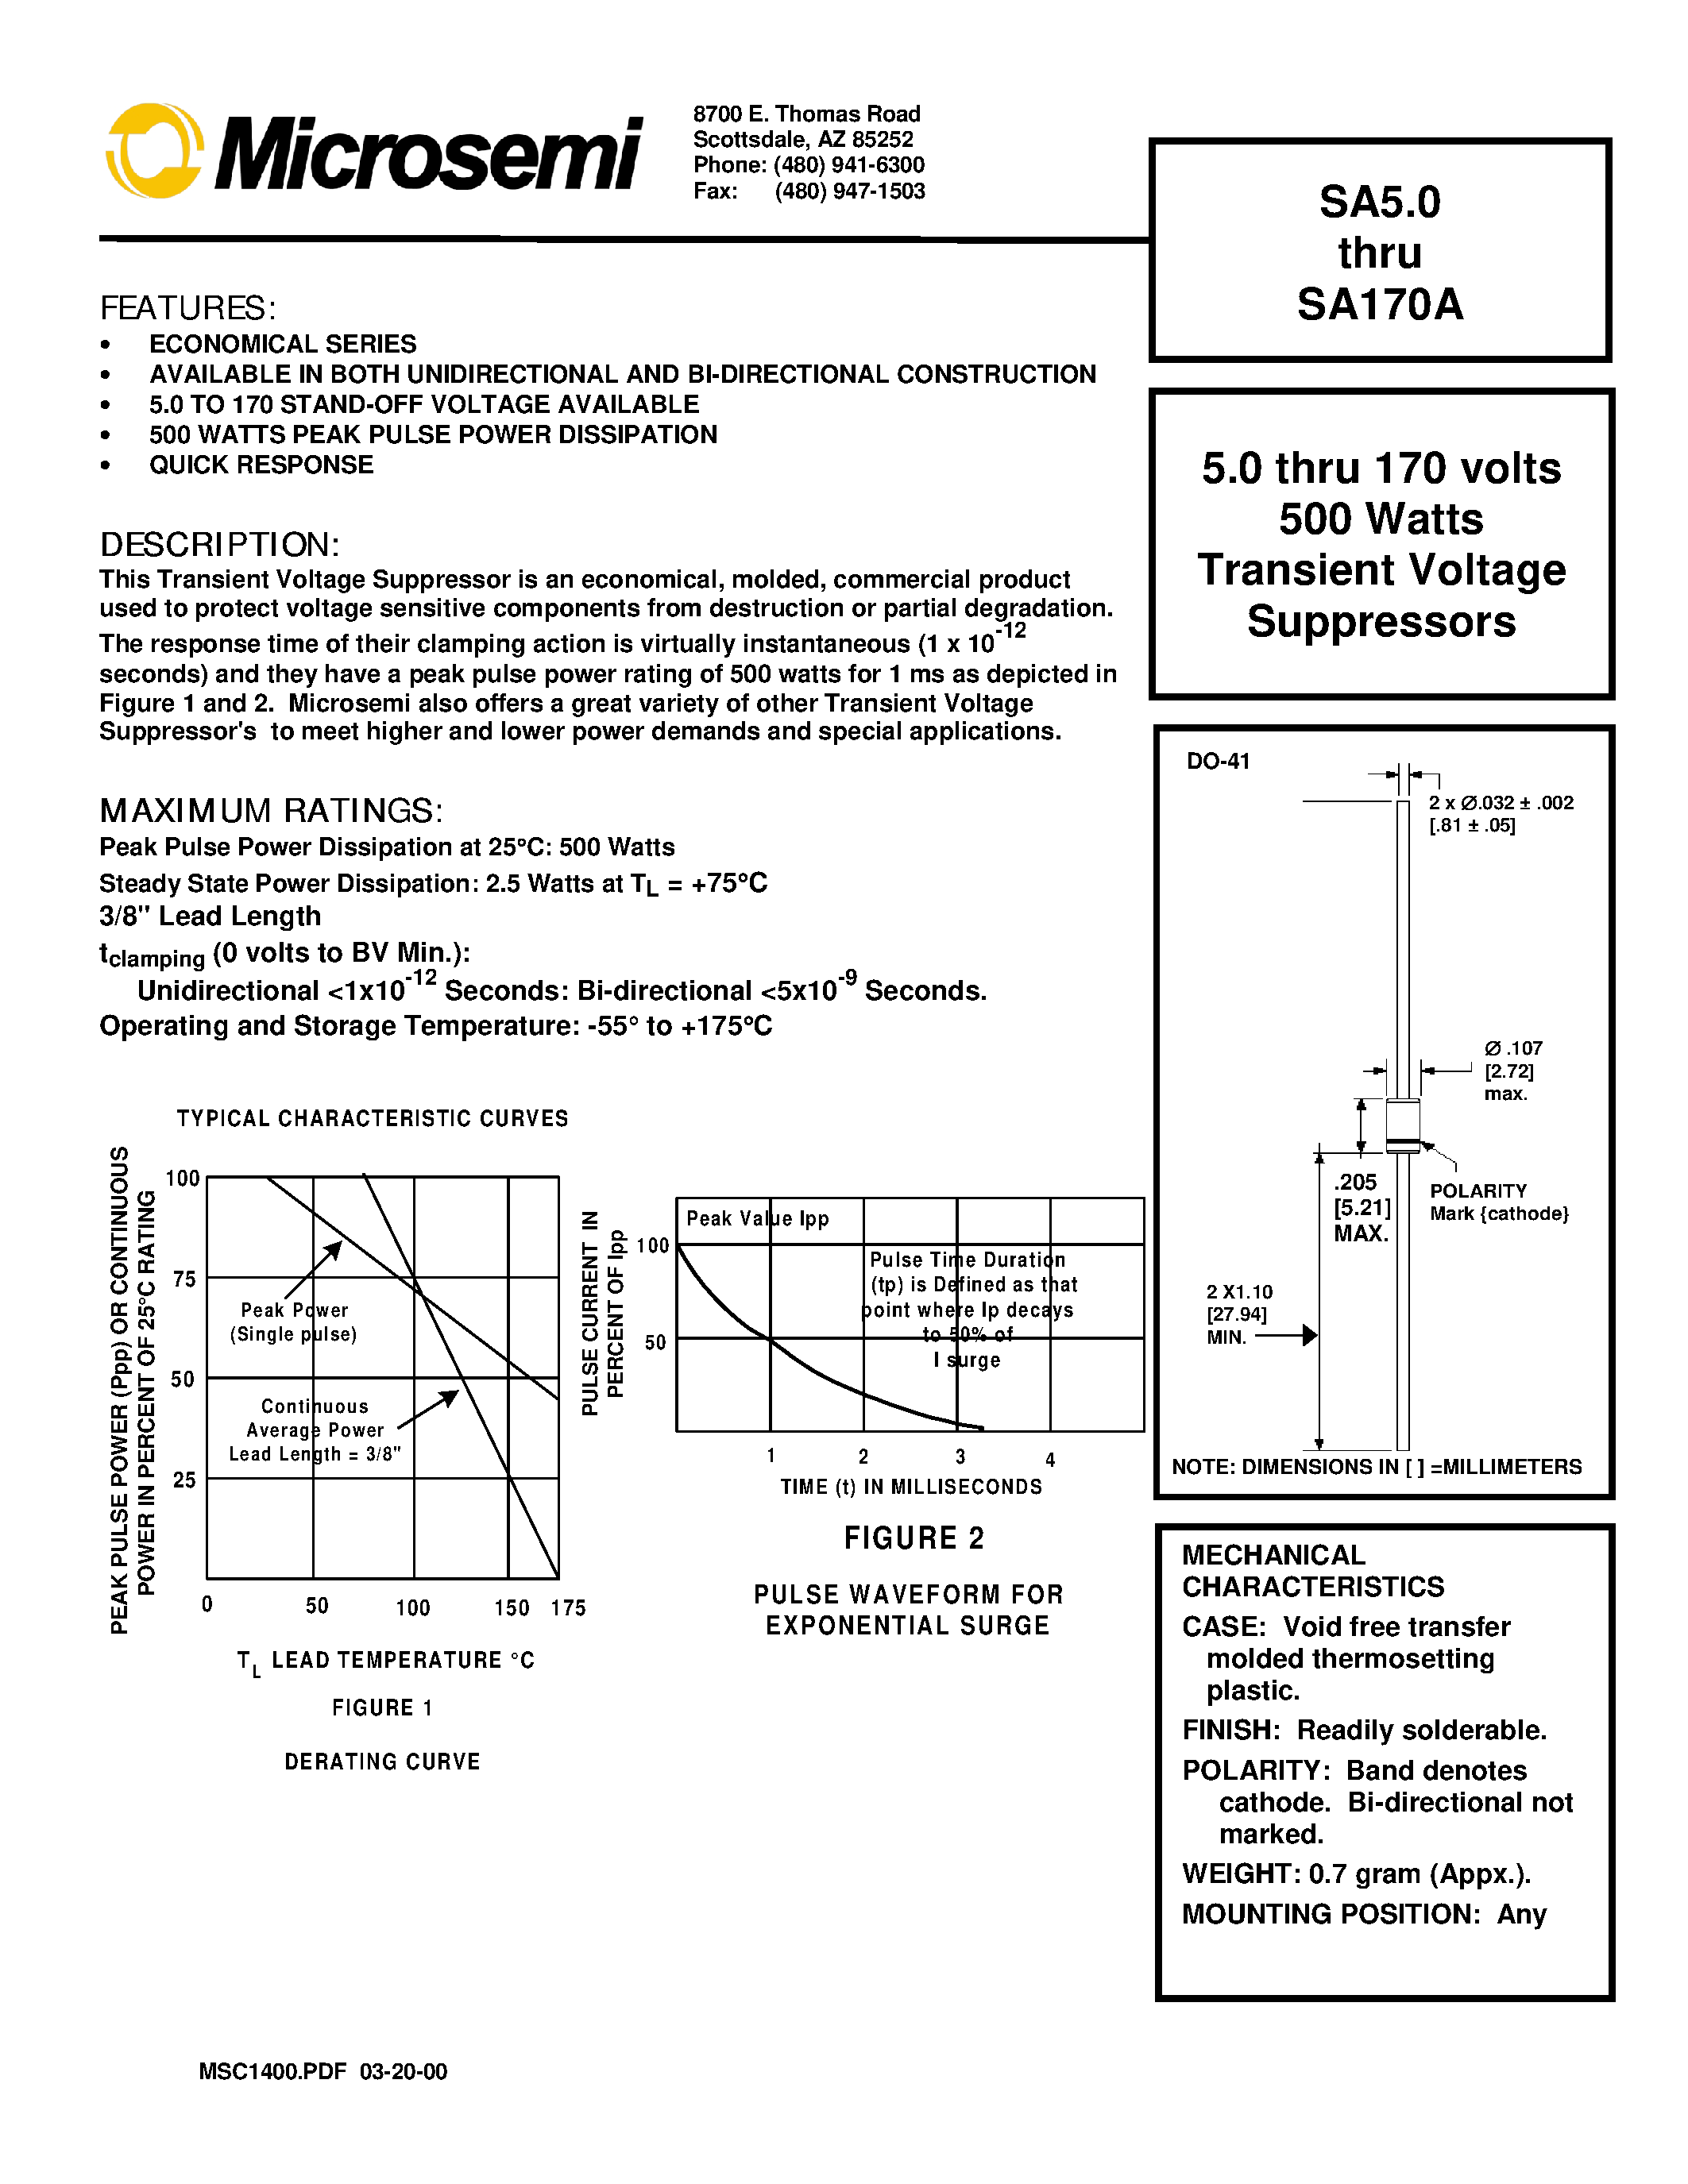 Datasheet SA28A - 5.0 thru 170 volts 500 Watts Transient Voltage Suppressors page 1